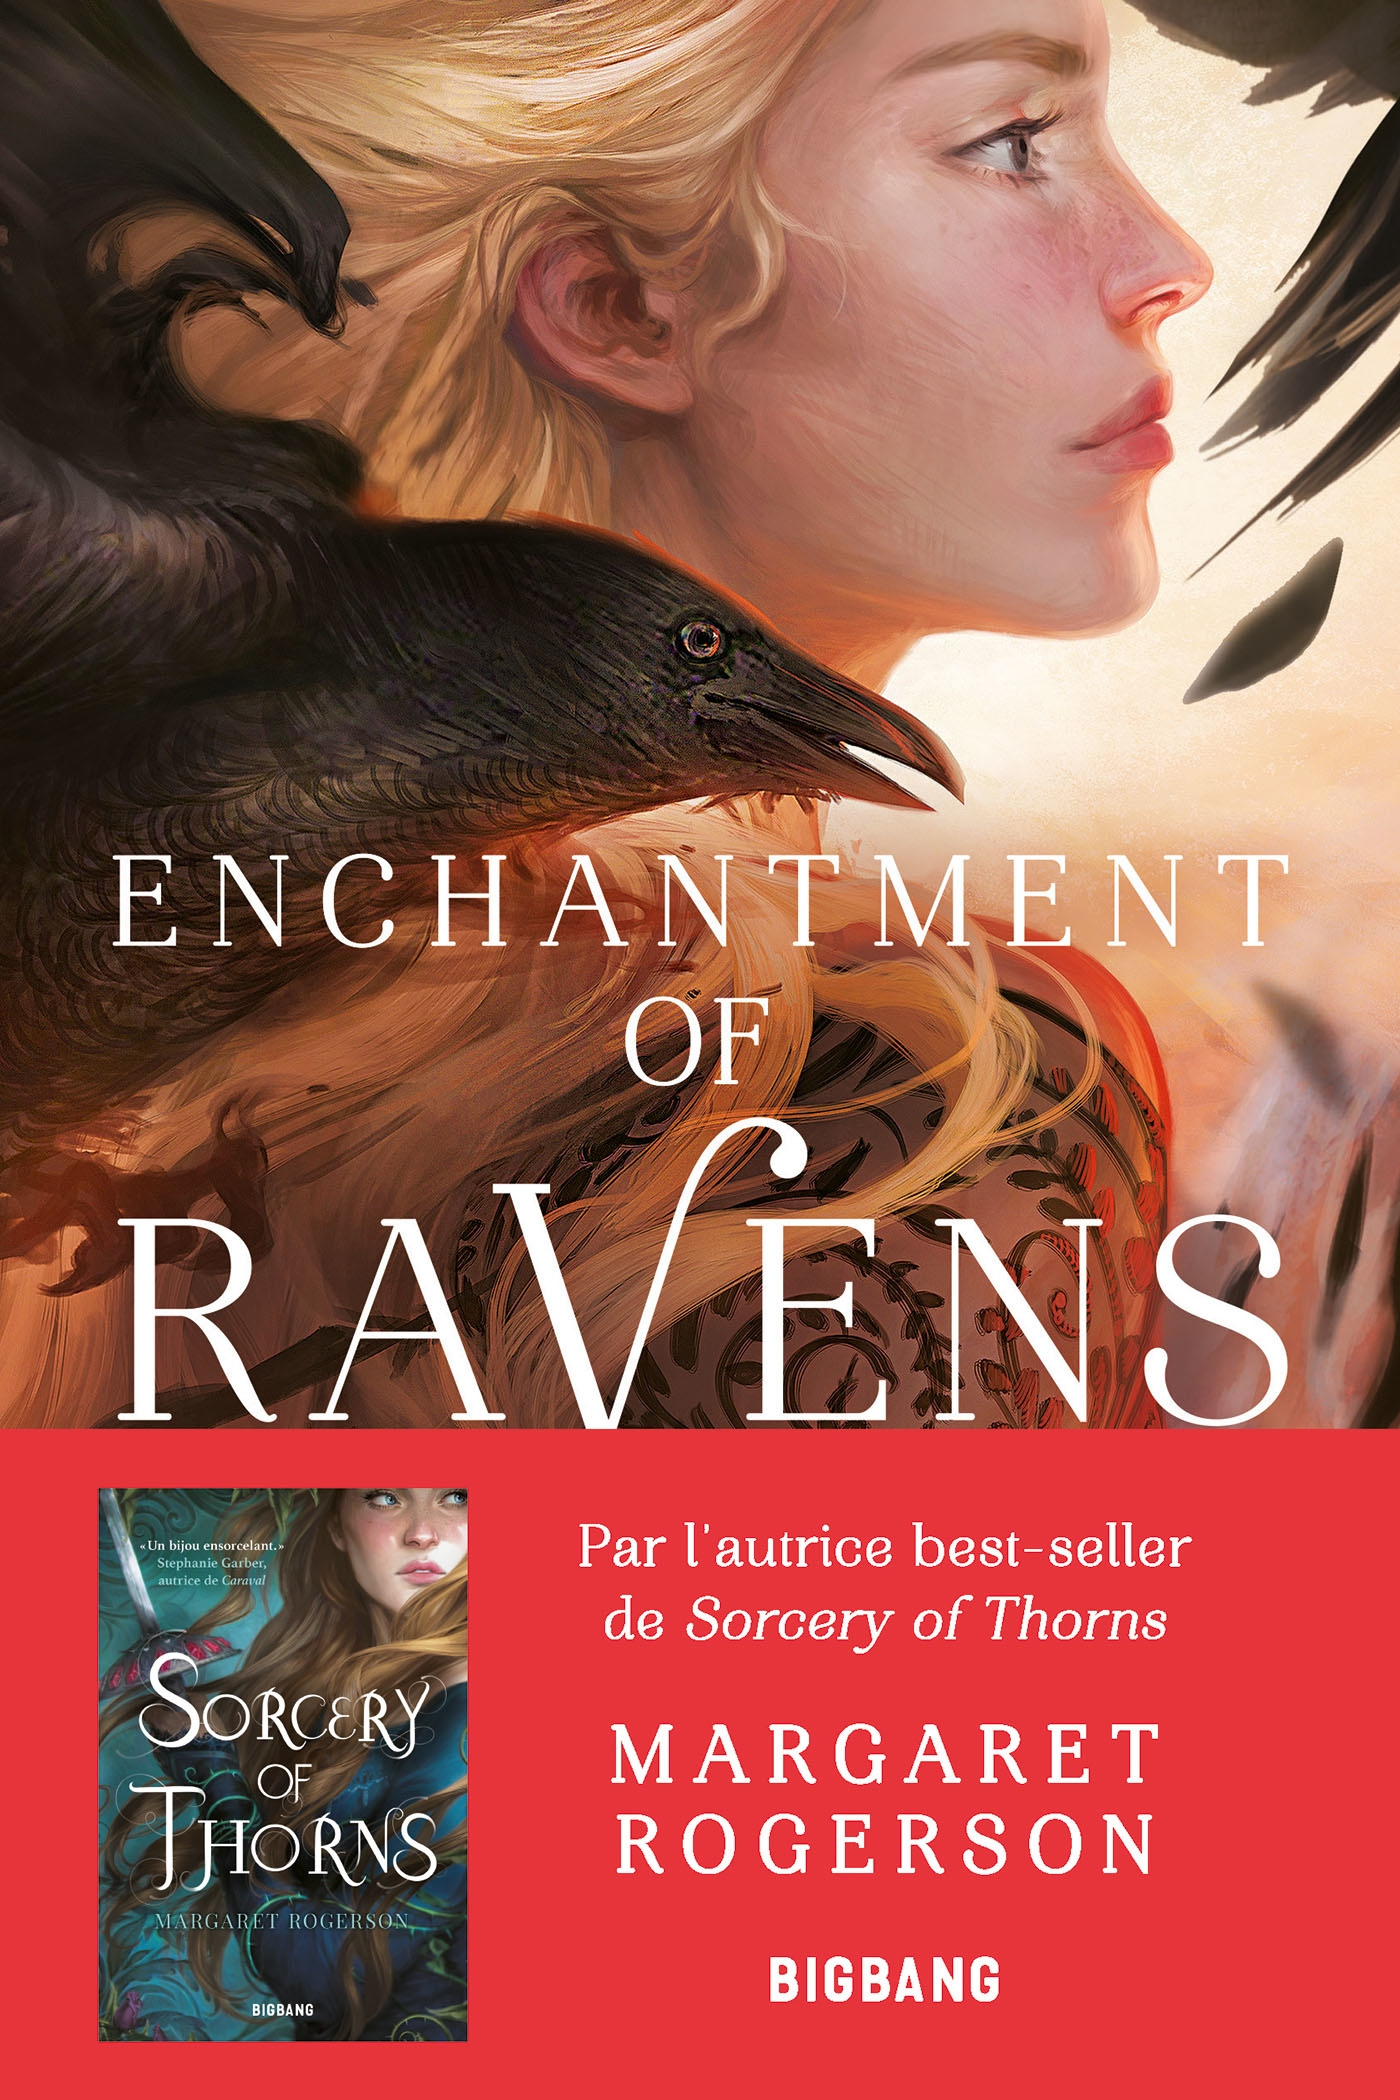 Afficher "Enchantment of Ravens"